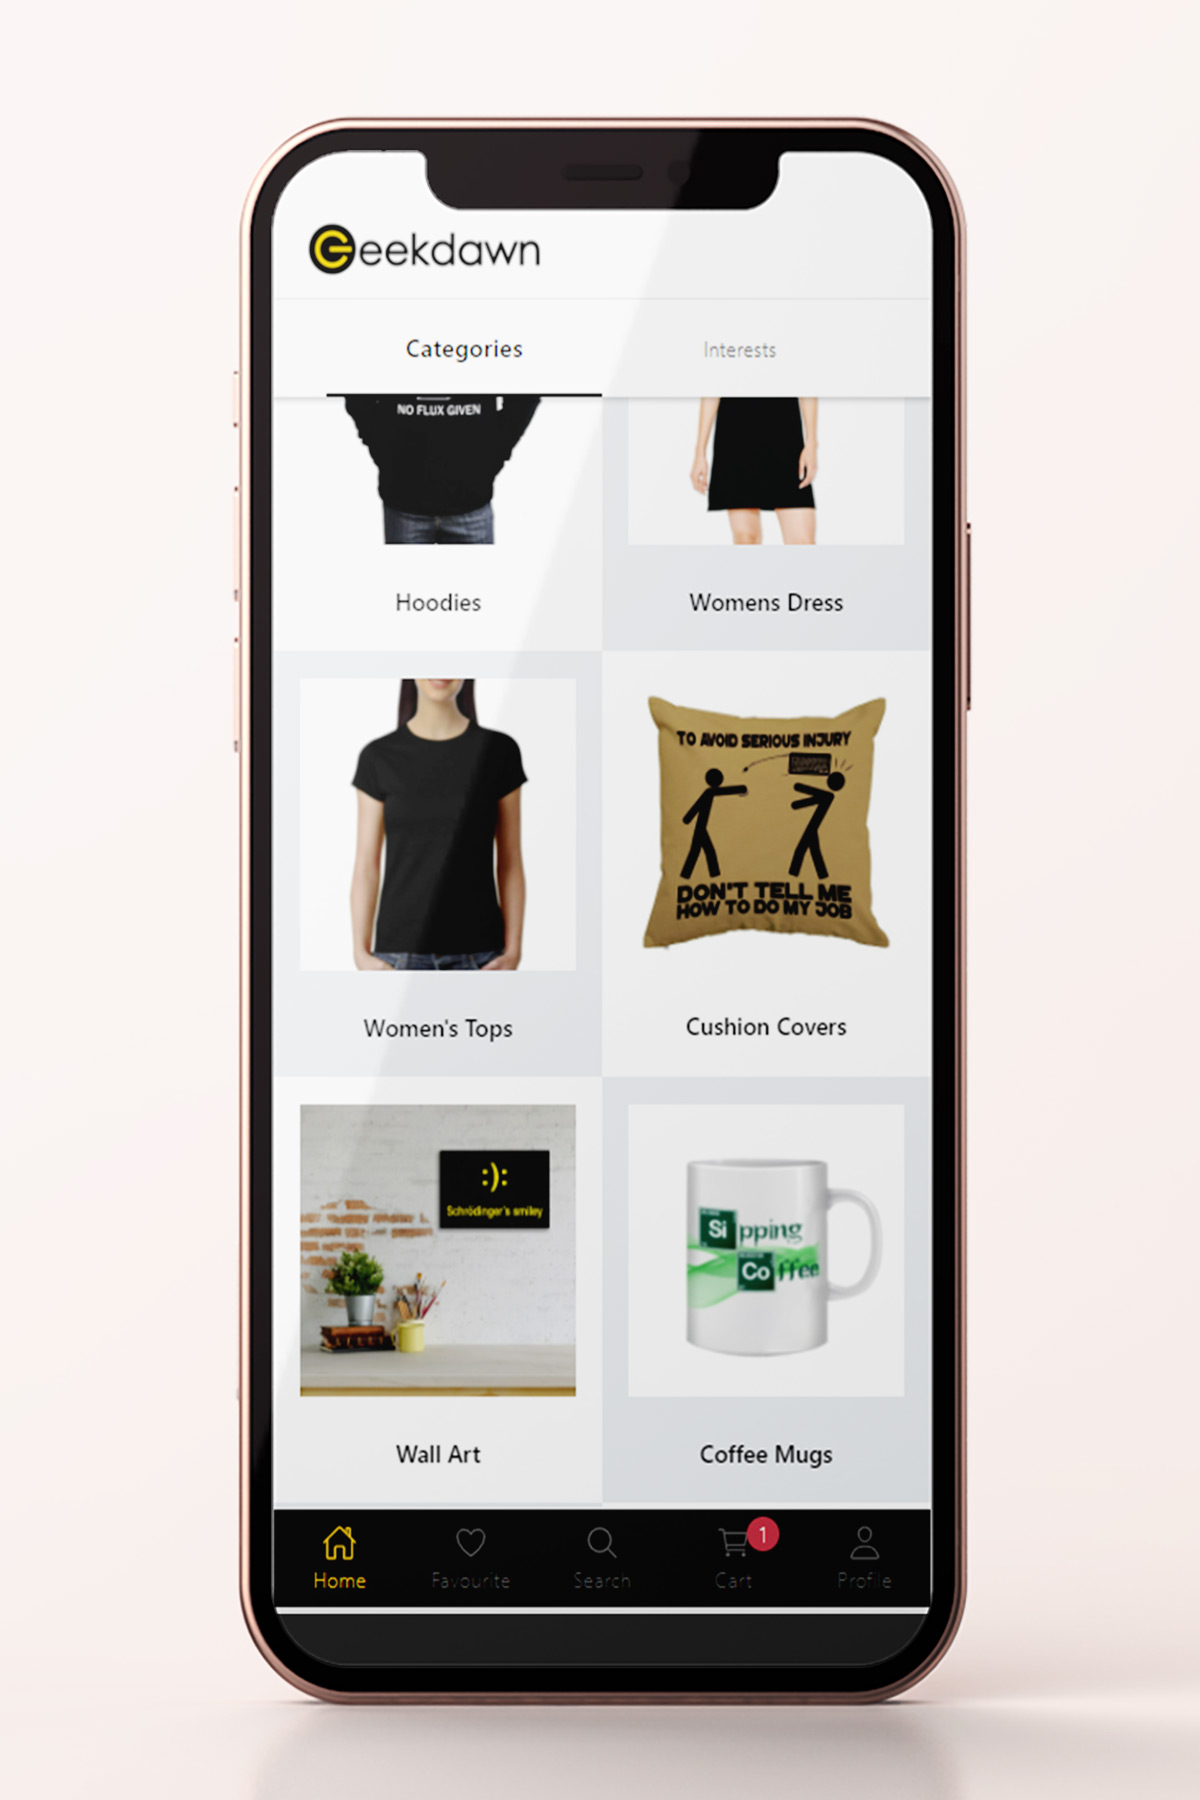 Shopify Mobile App Development